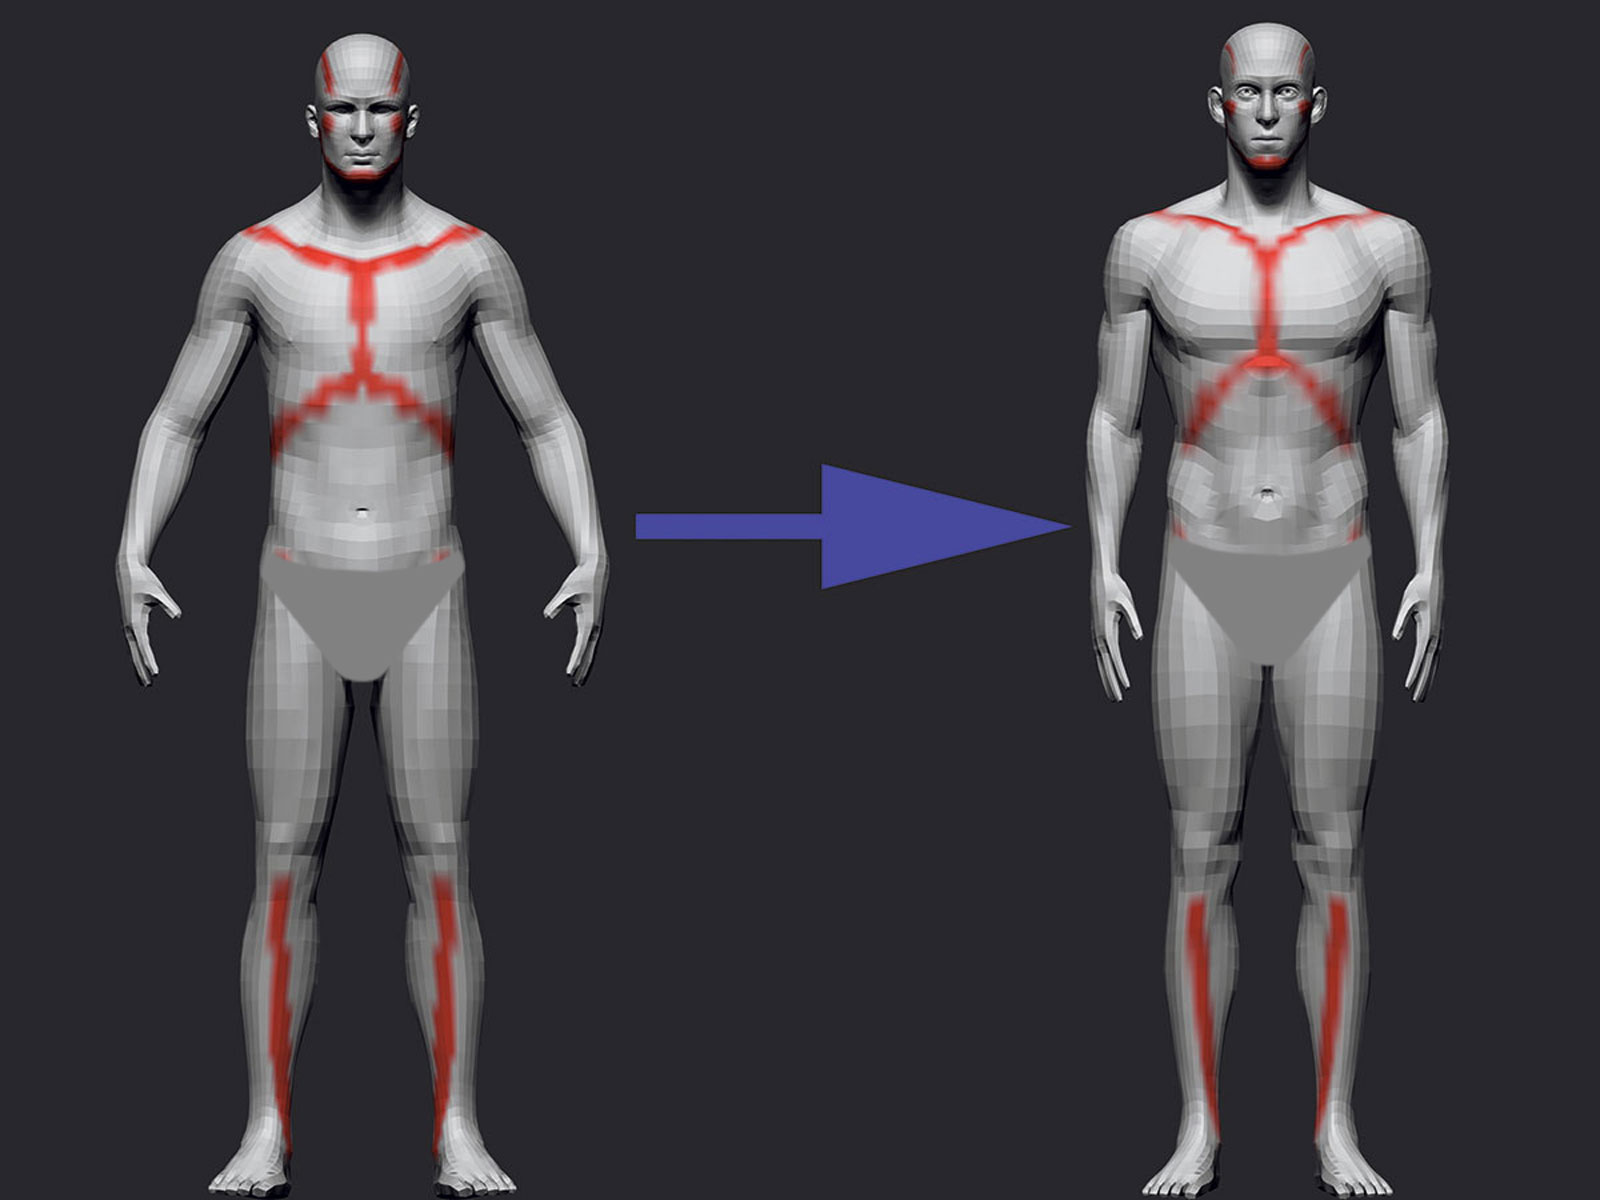 mojasamesazi anatomi zibrush9 1 - آموزش ساخت آناتومی در زیبراش